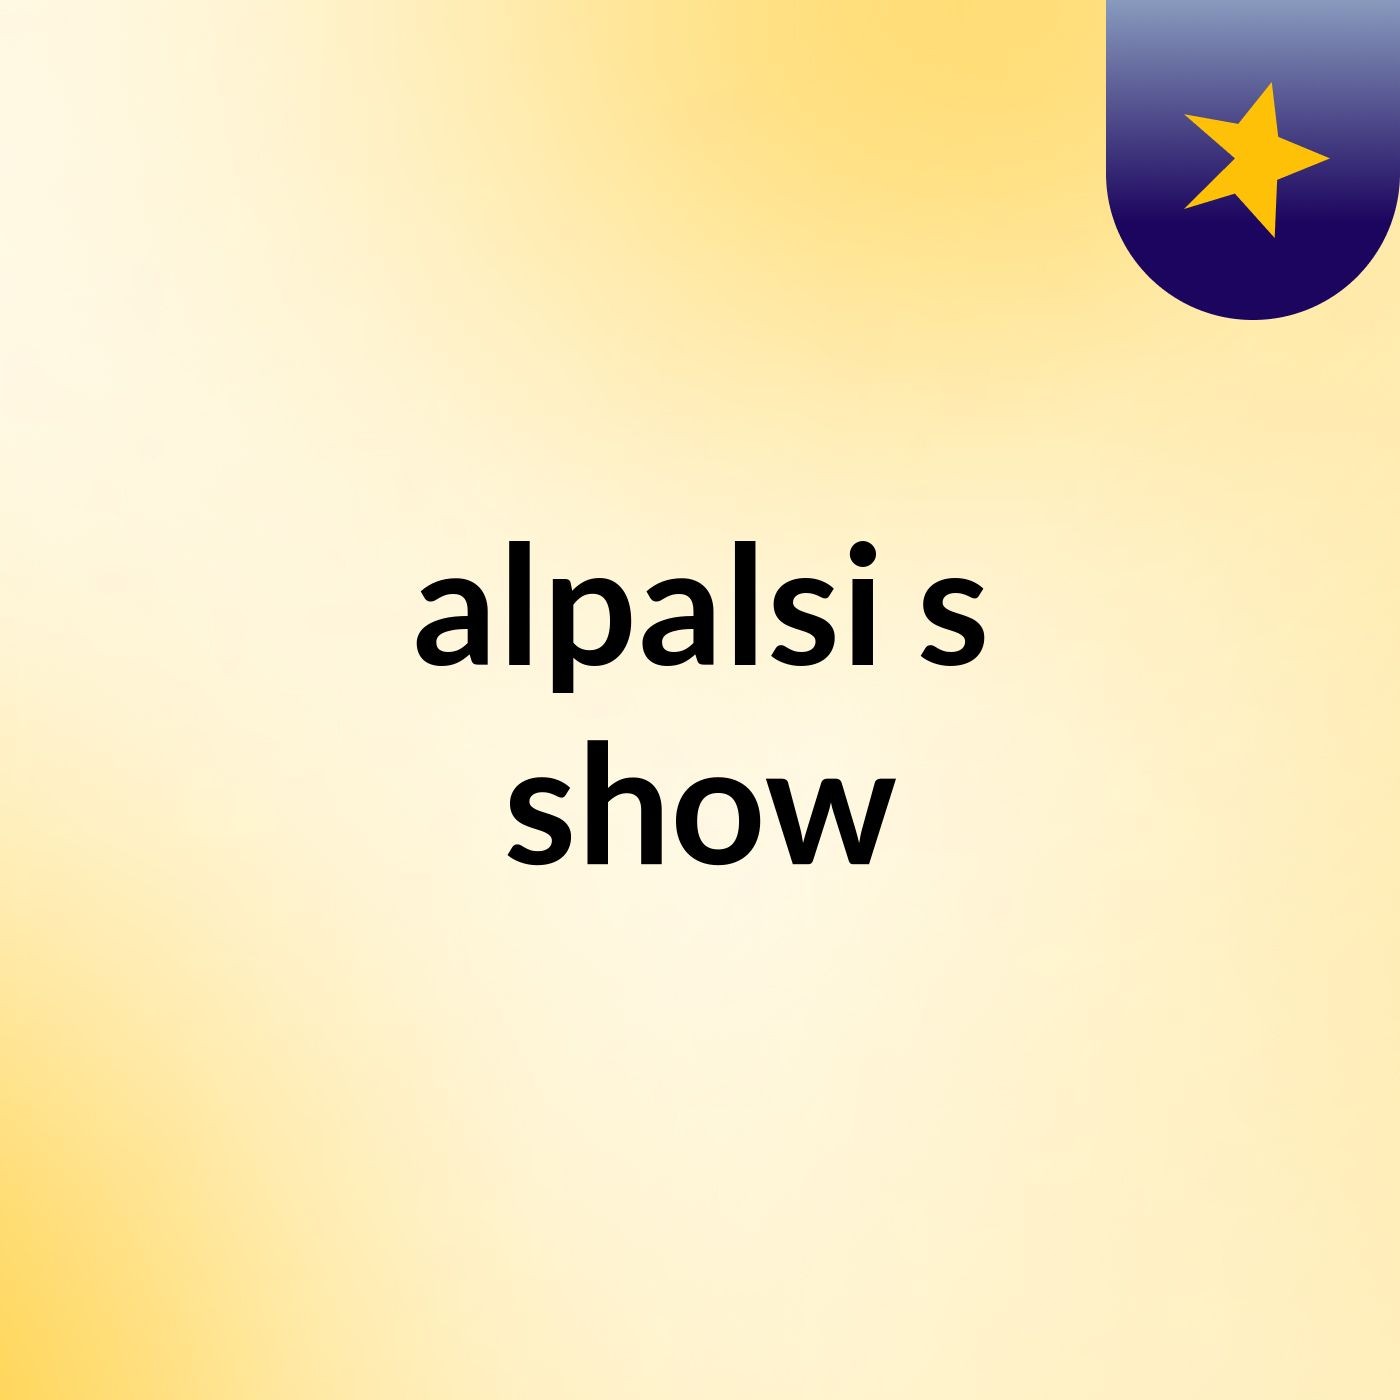 alpalsi's show